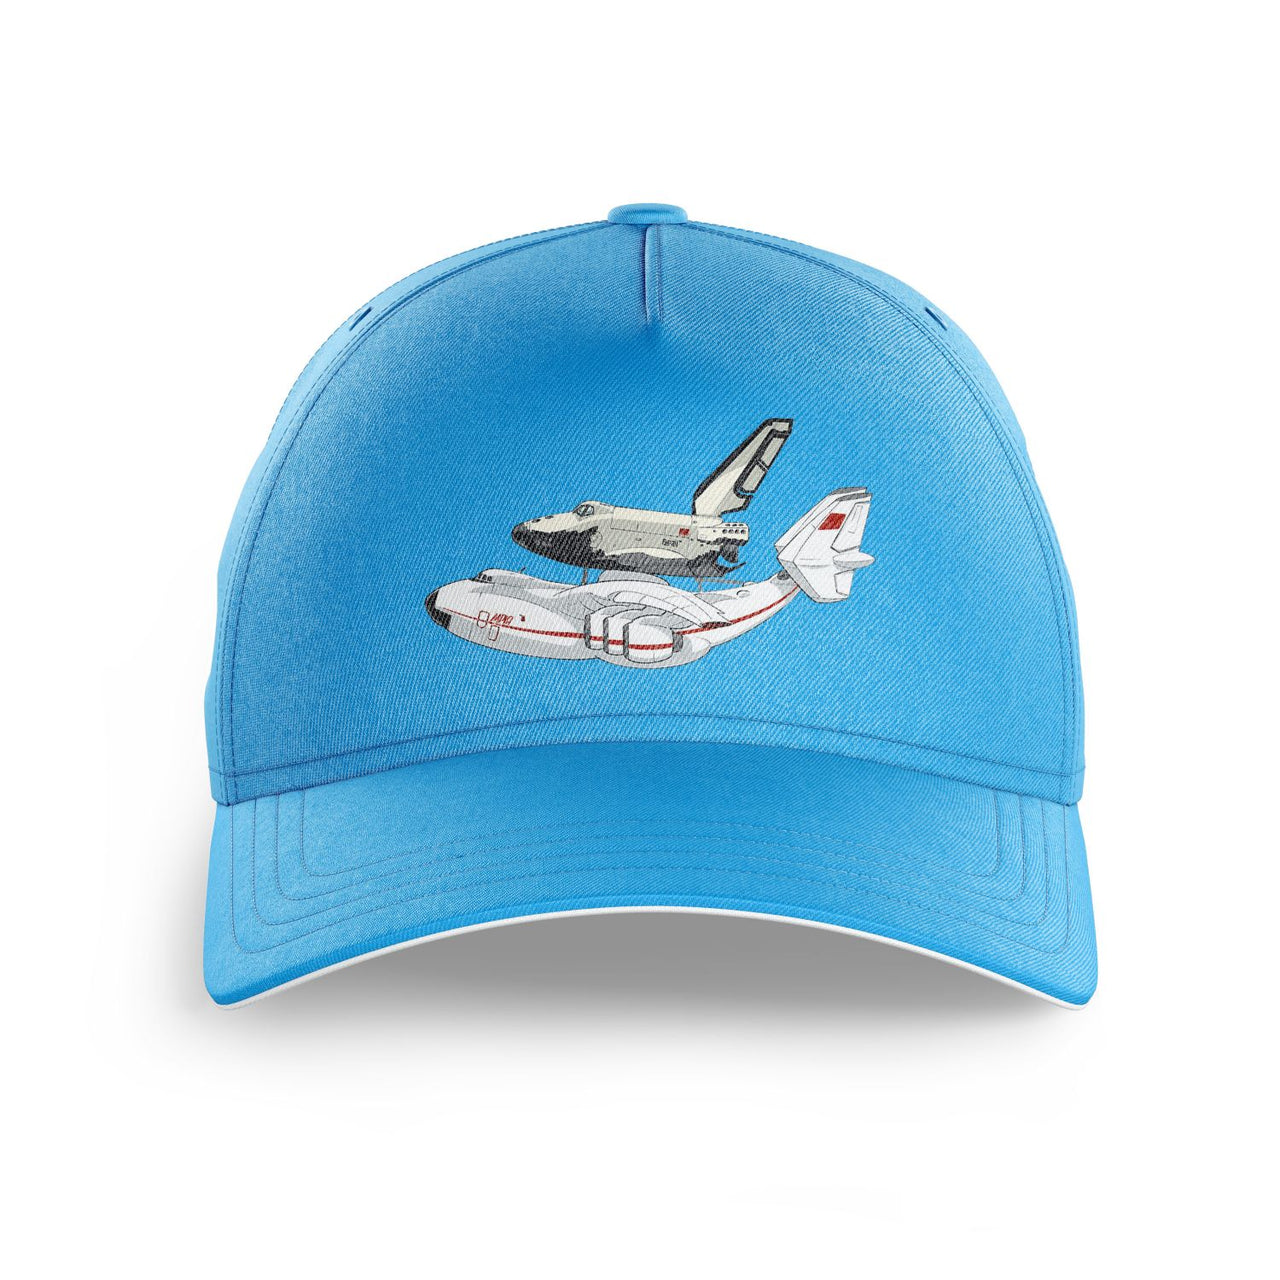 Buran & An-225 Printed Hats